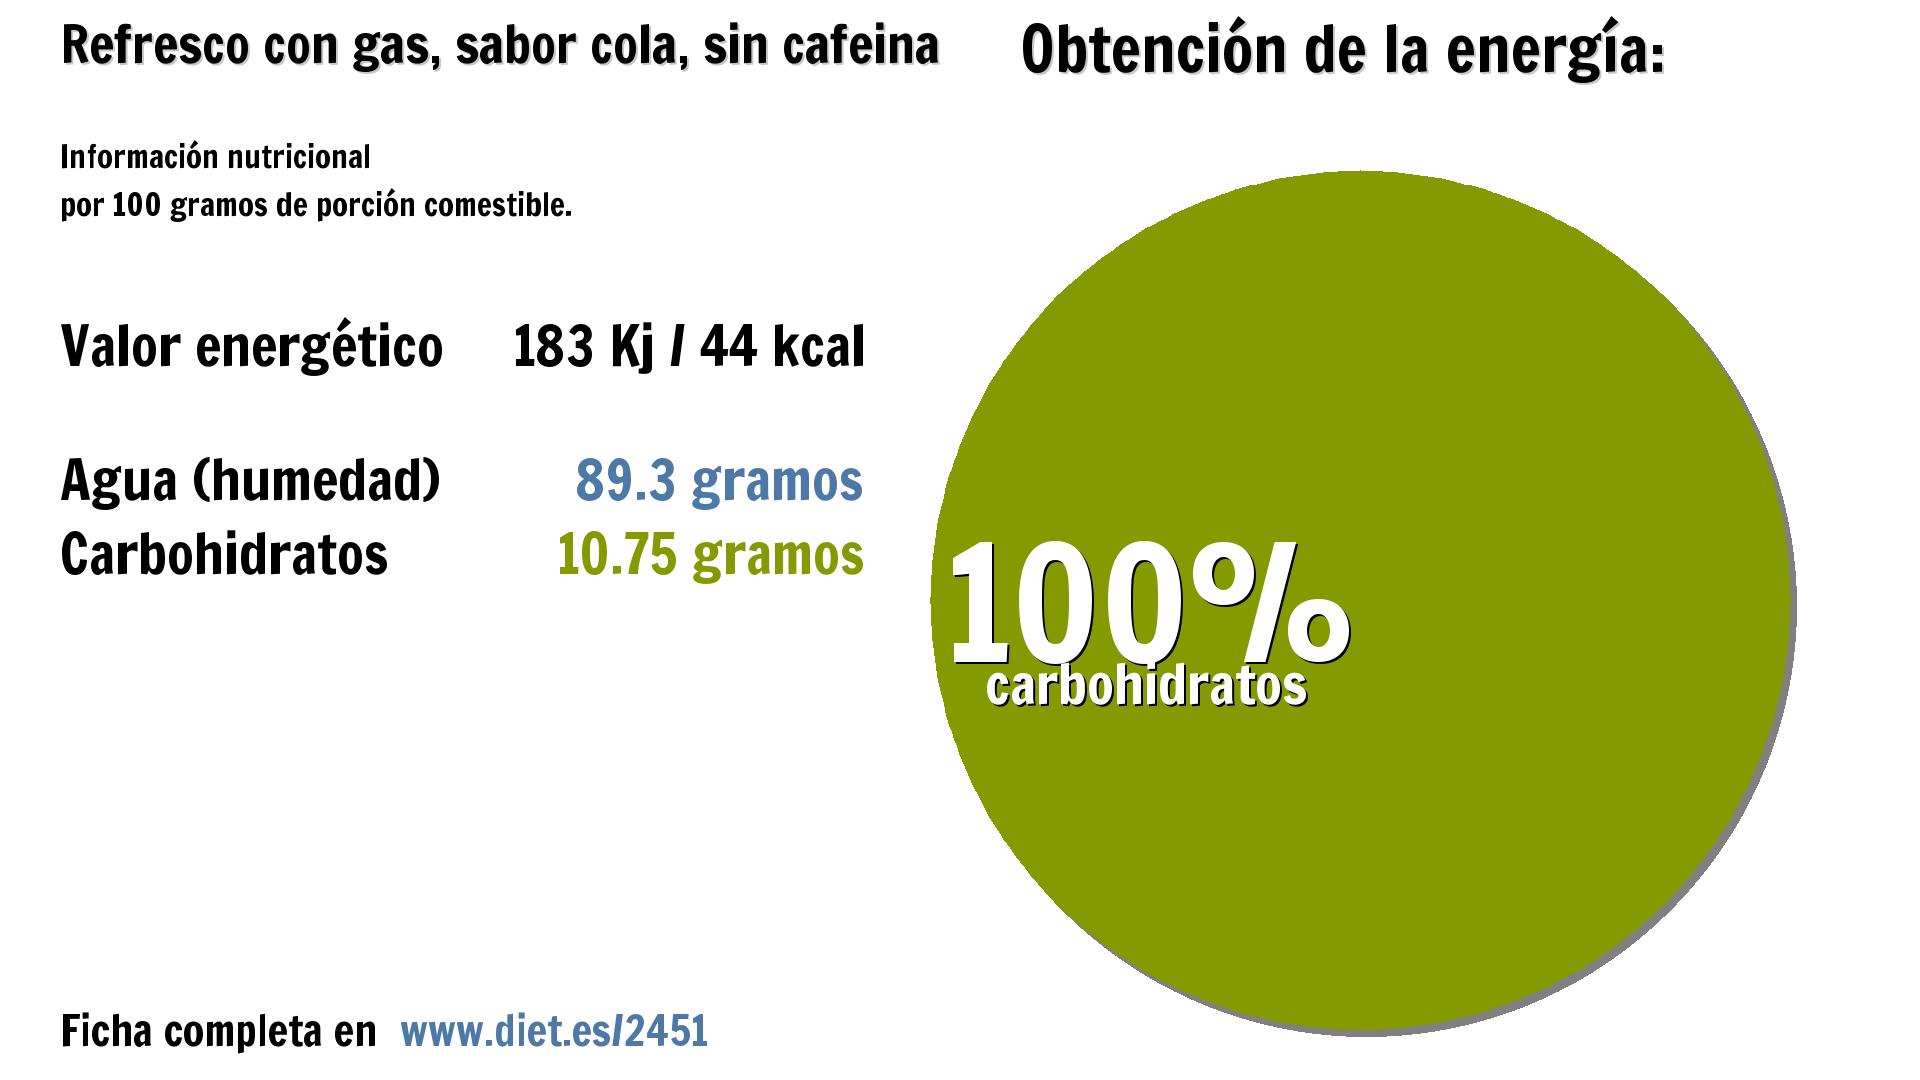 Refresco con gas, sabor cola, sin cafeina: energía 183 Kj, agua 89 g. y carbohidratos 11 g.